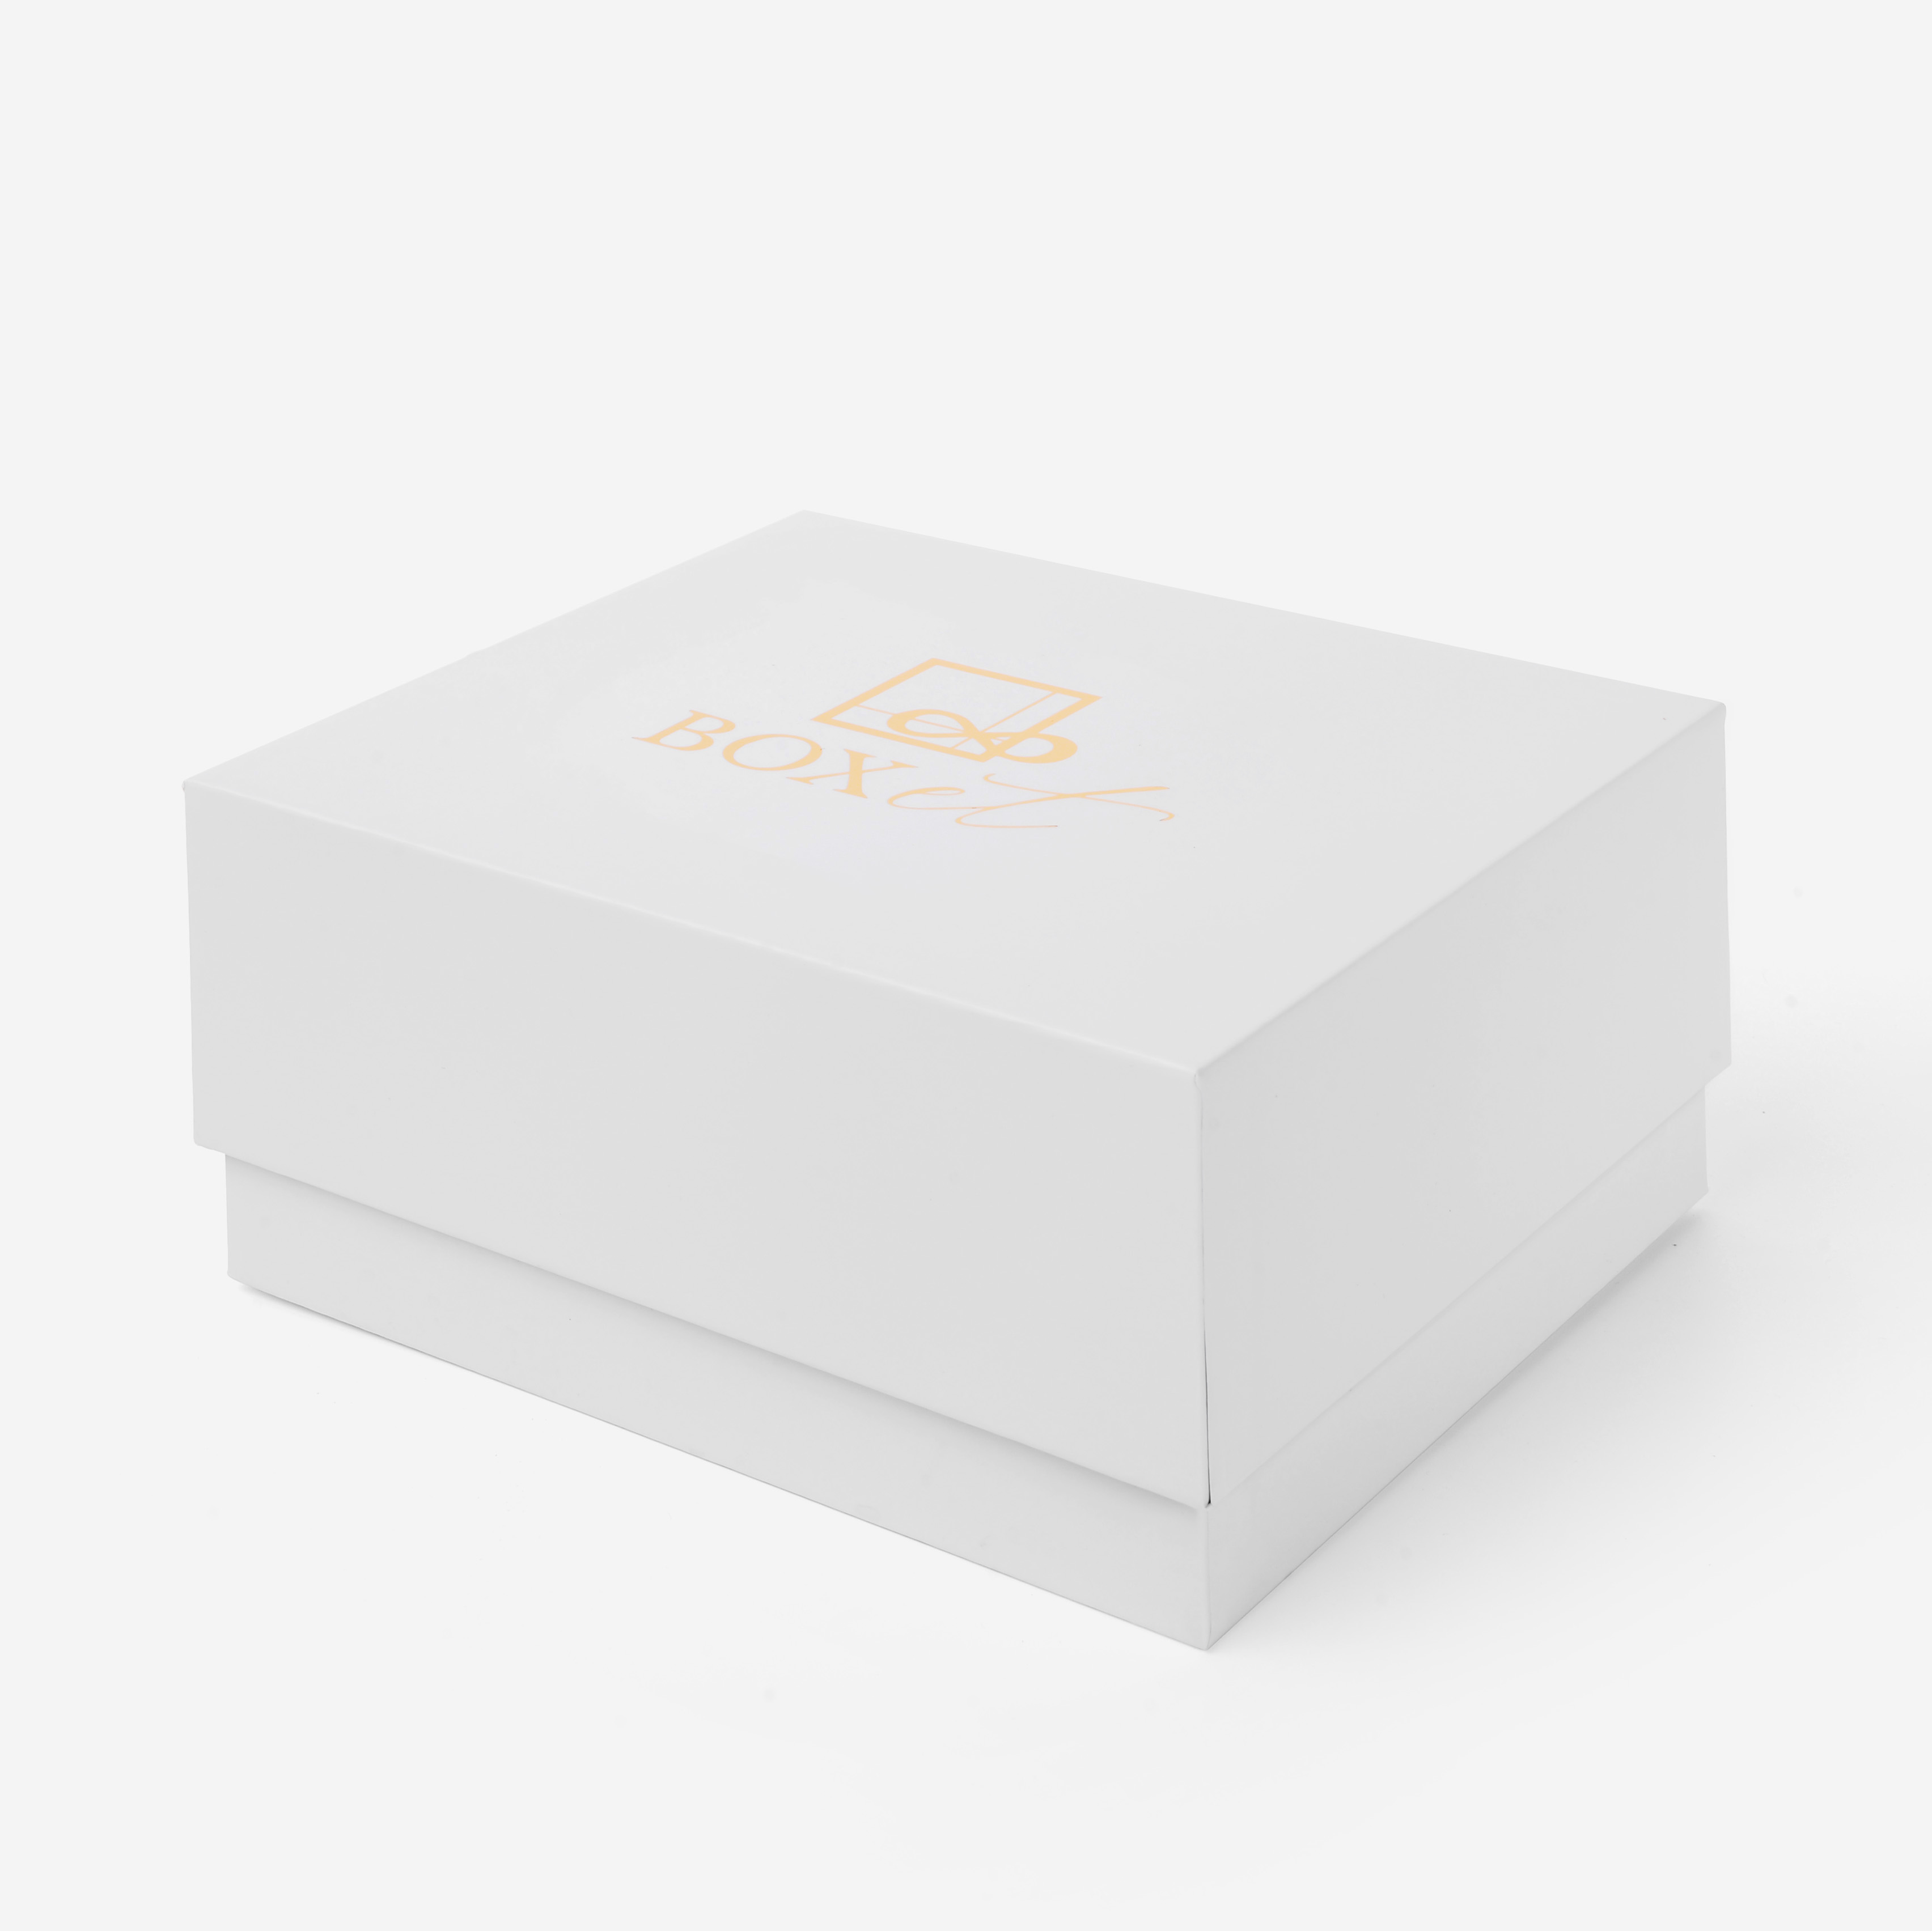 Custom Made Cardboard Gold Stamping Cosmetic Packaging Box